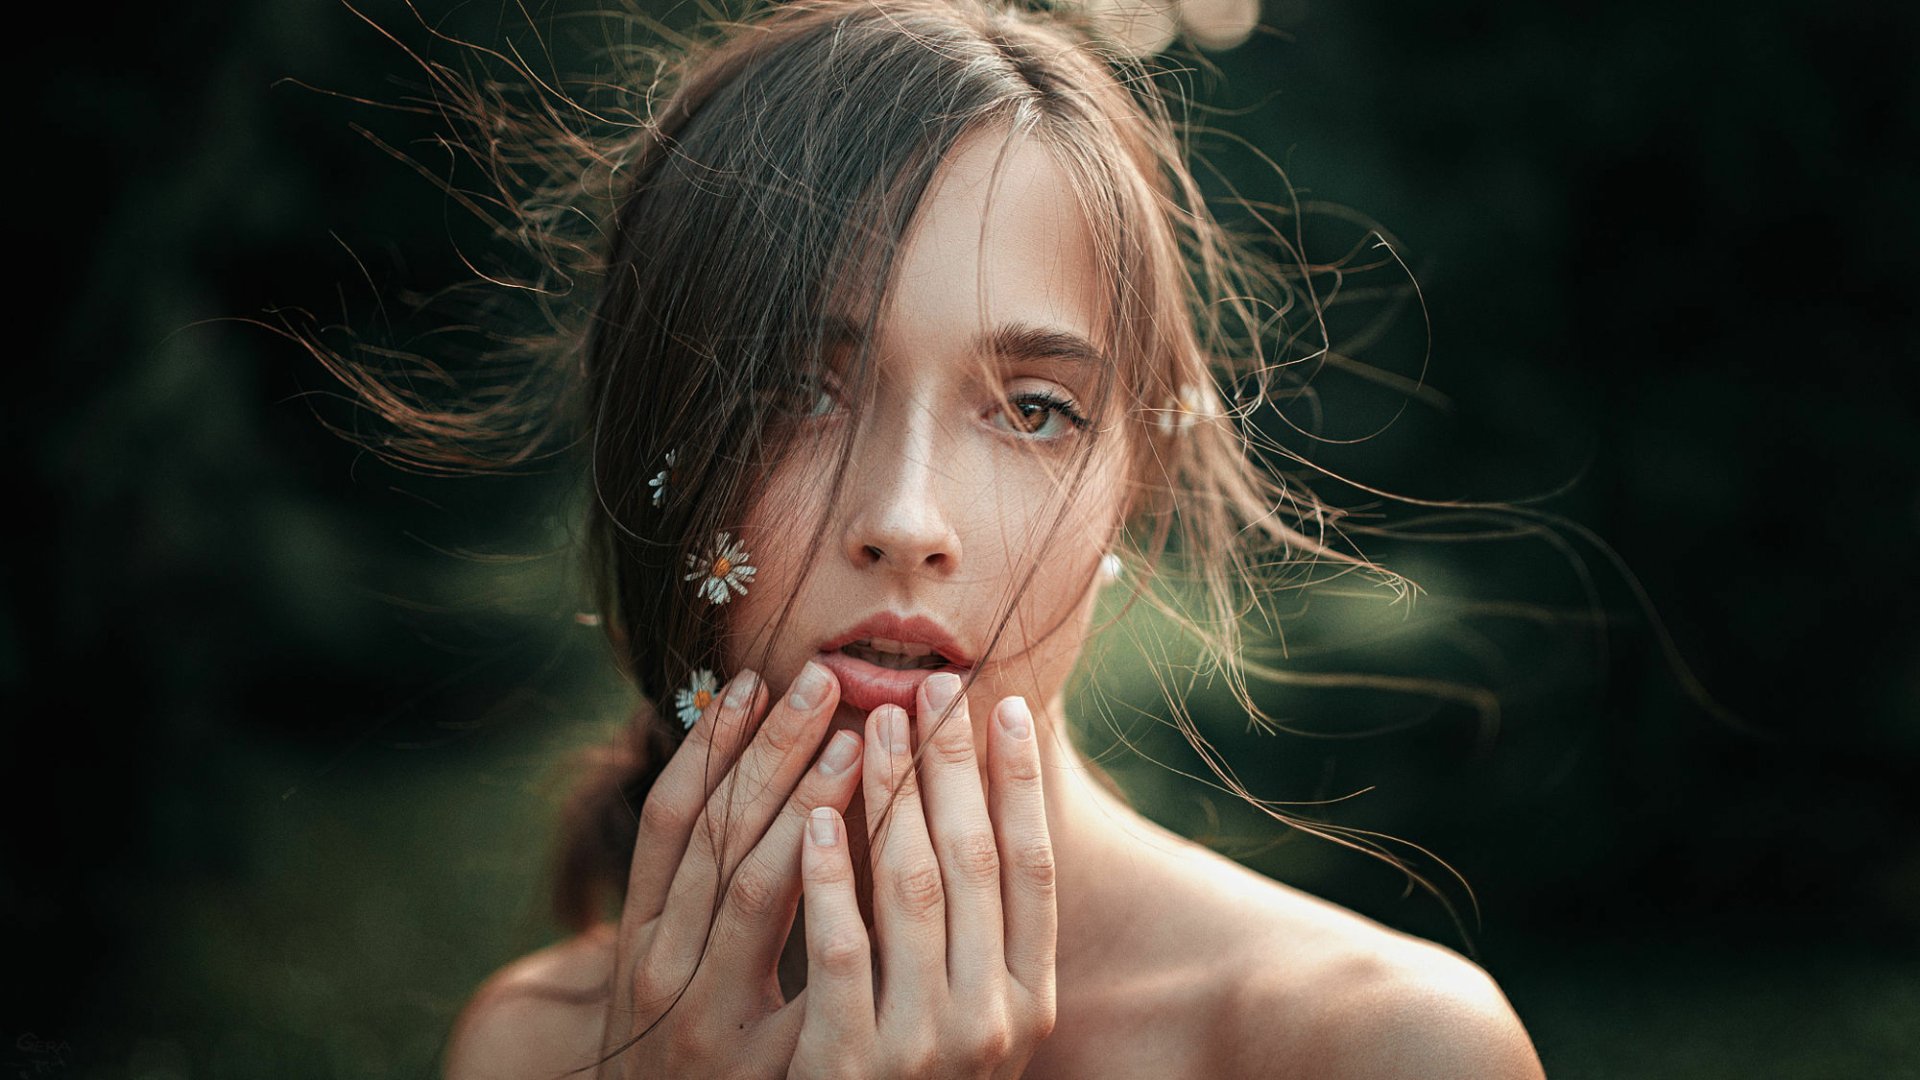 Download Brown Eyes Blur Brunette Model Woman Face Hd Wallpaper By Georgy Chernyadyev 4858